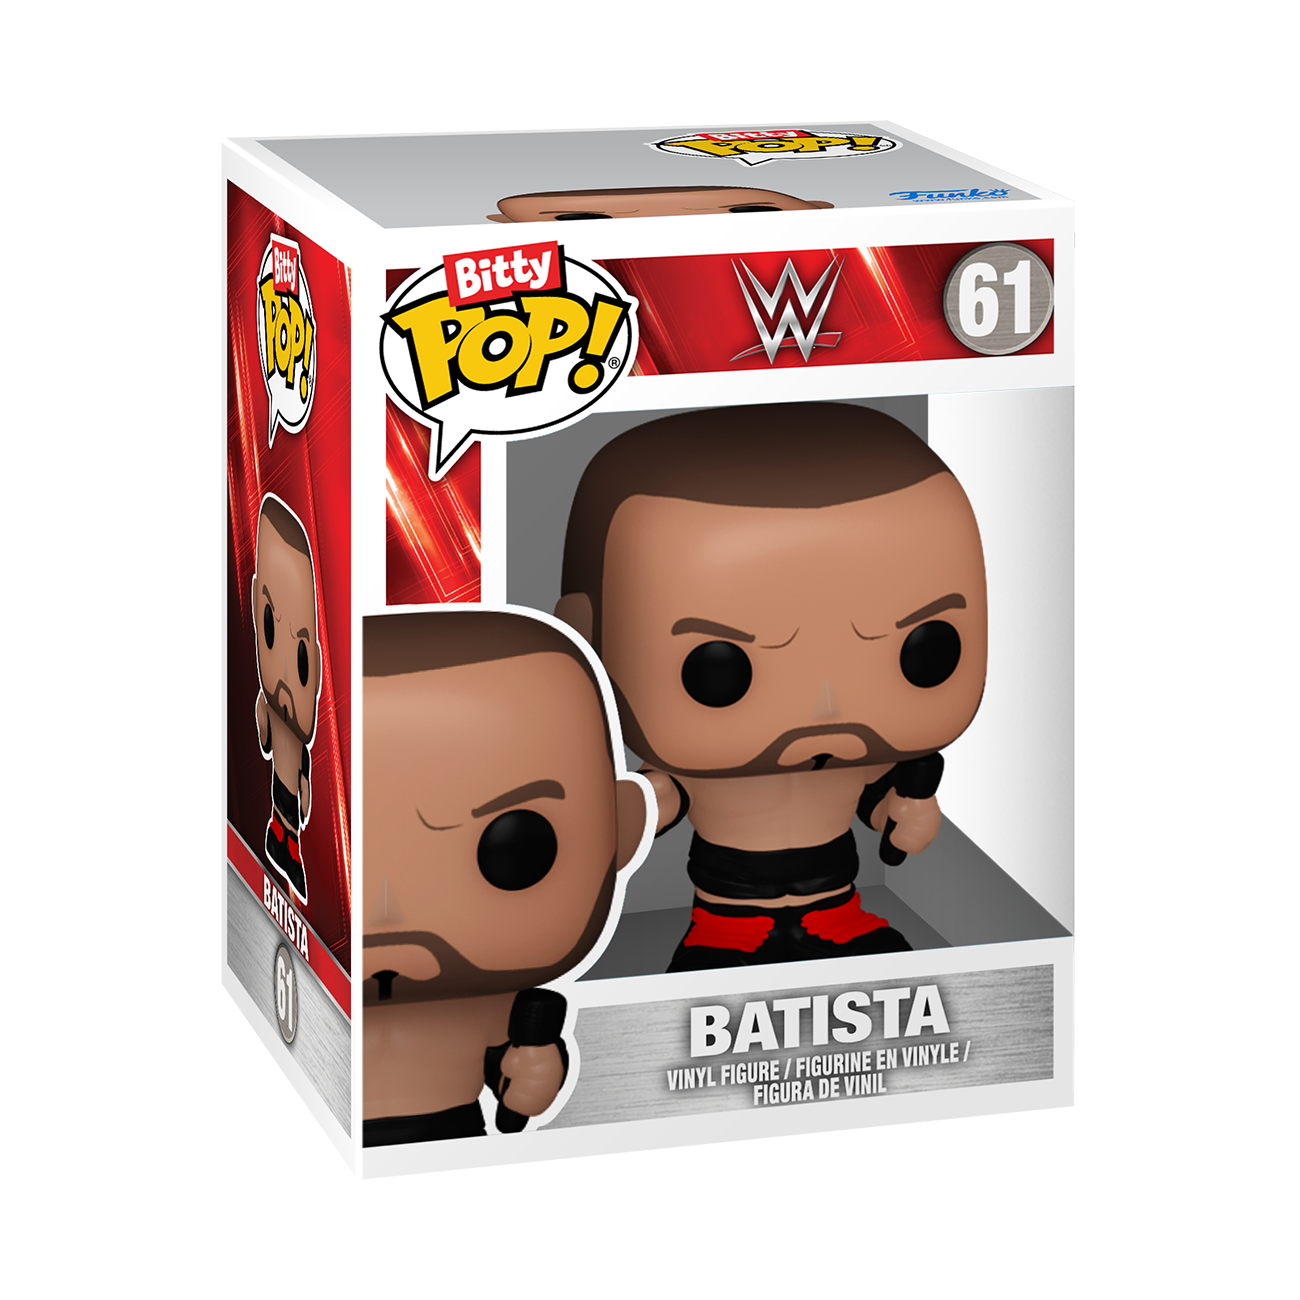 Funko Bitty POP! WWE Vinyl Figure Set 4-Pack (Undertaker, Batista, British Bulldog, Mystery Pop!)